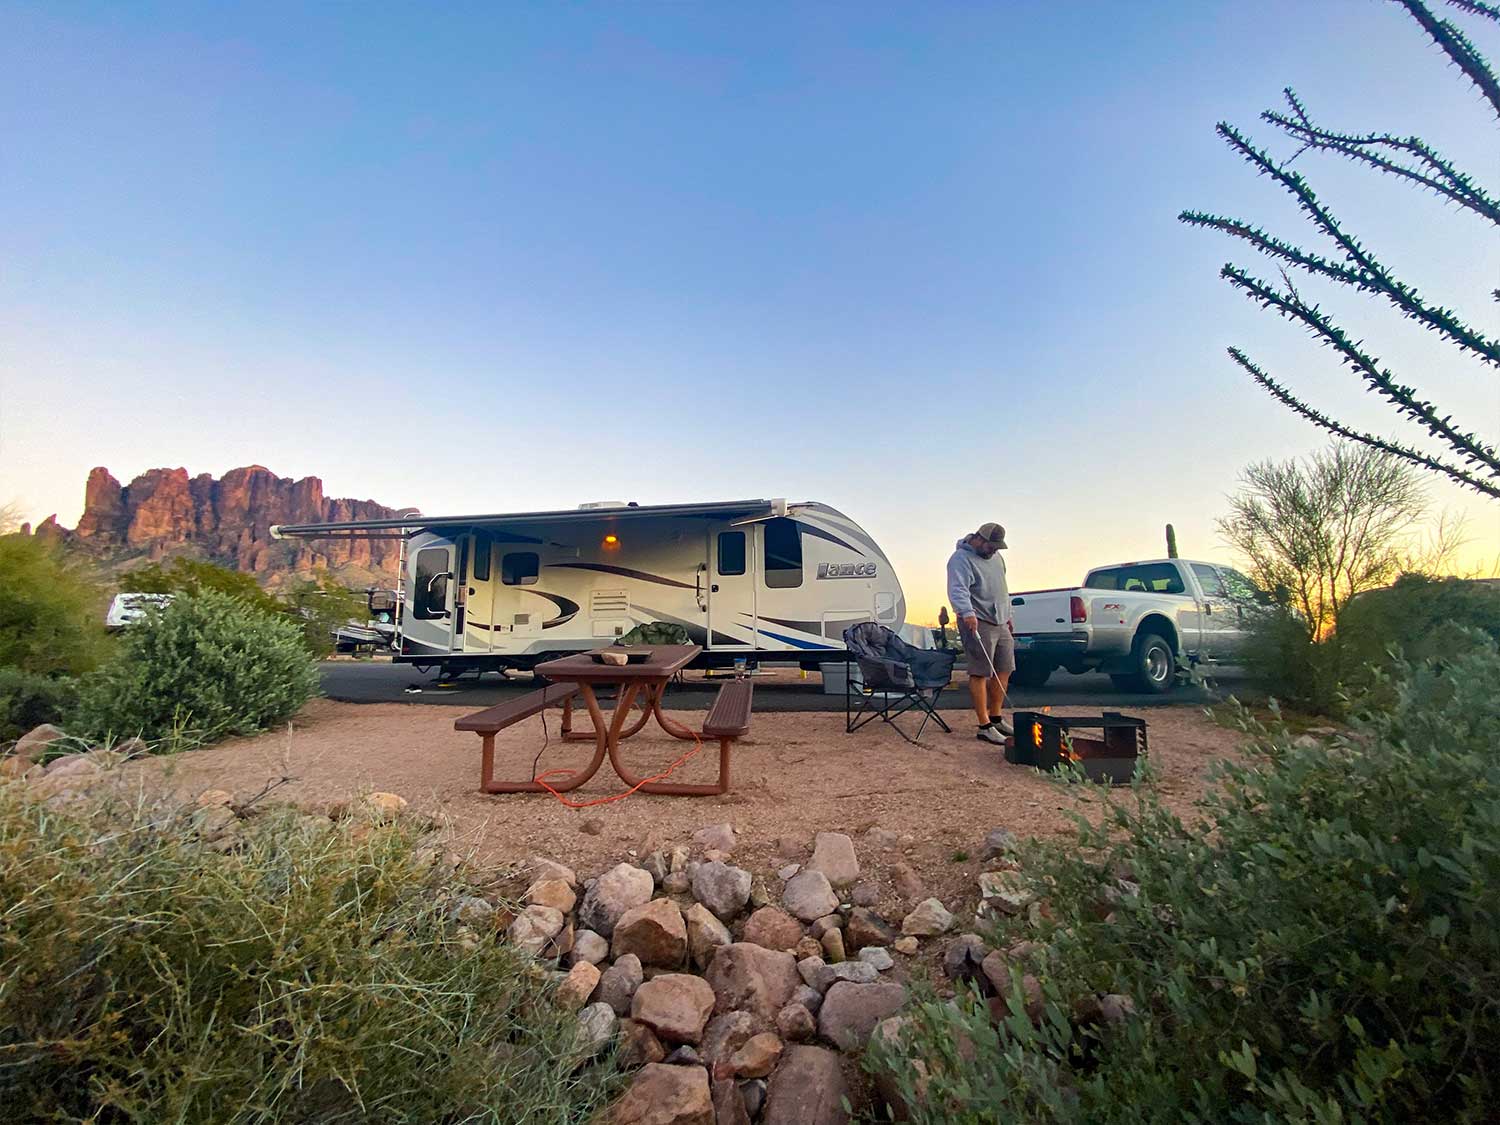 RV setup at campsite in the Arizona desert.